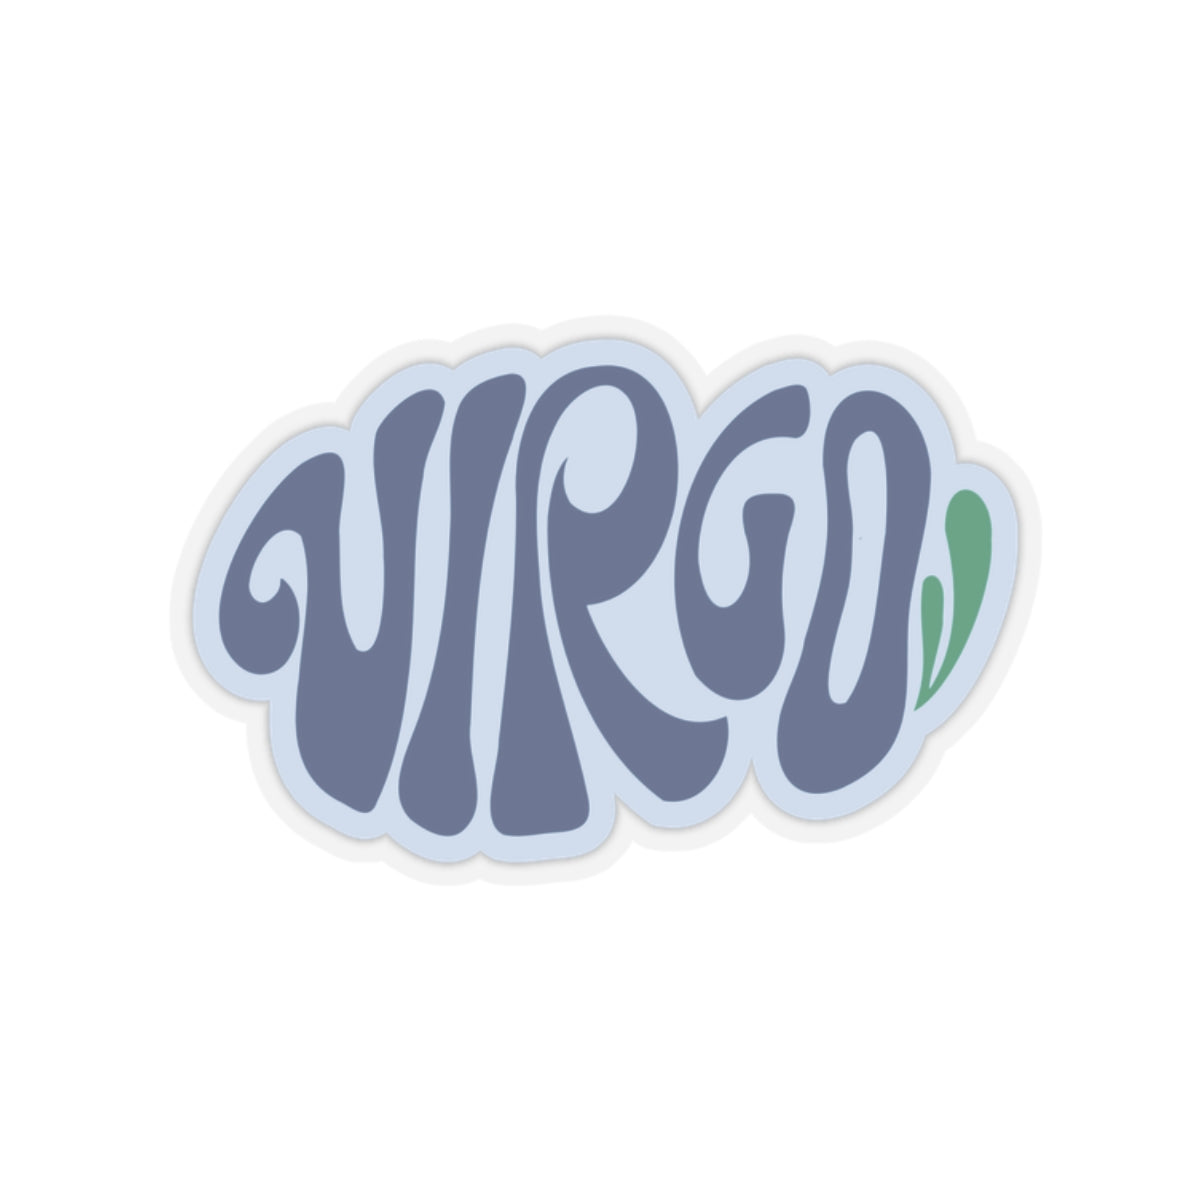 Groovy Virgo sticker